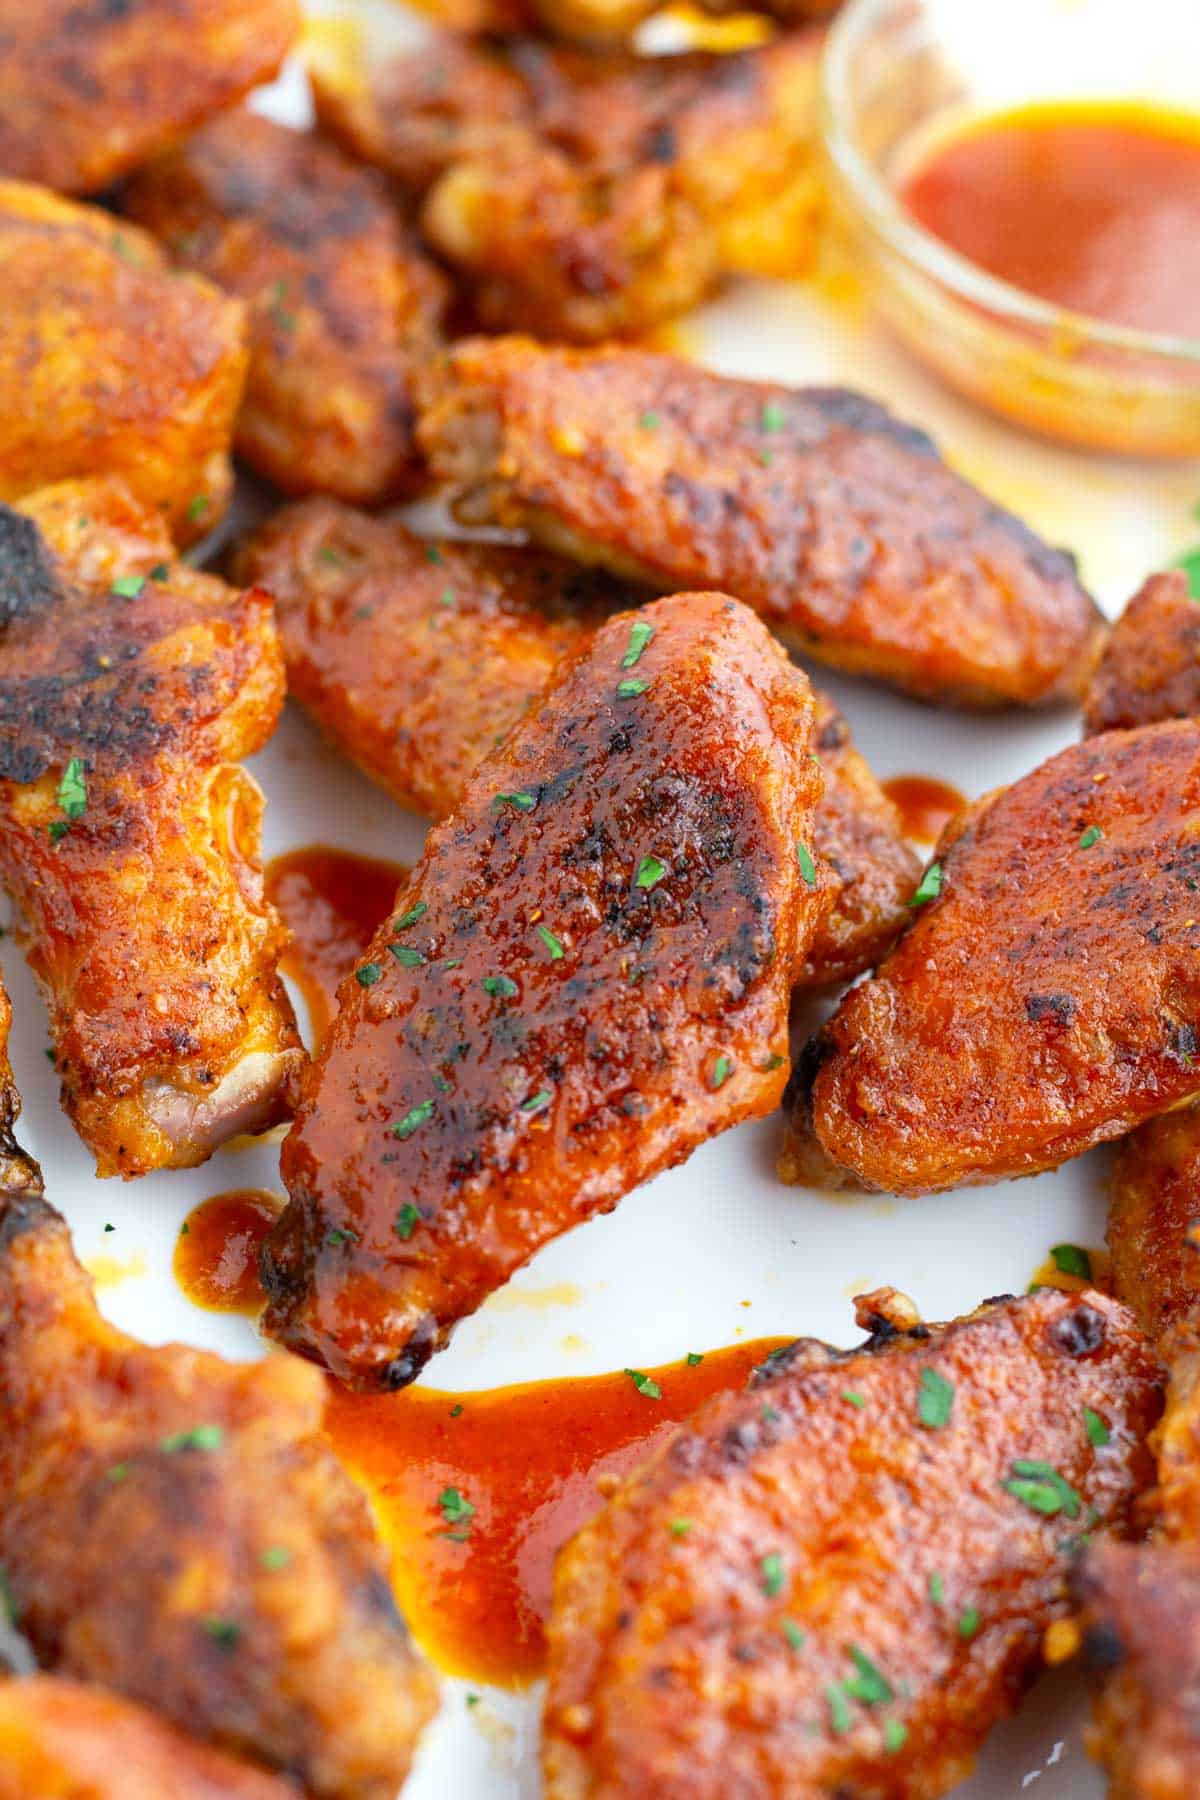 Crispy skin on chicken wing coated in spicy buffalo sauce.